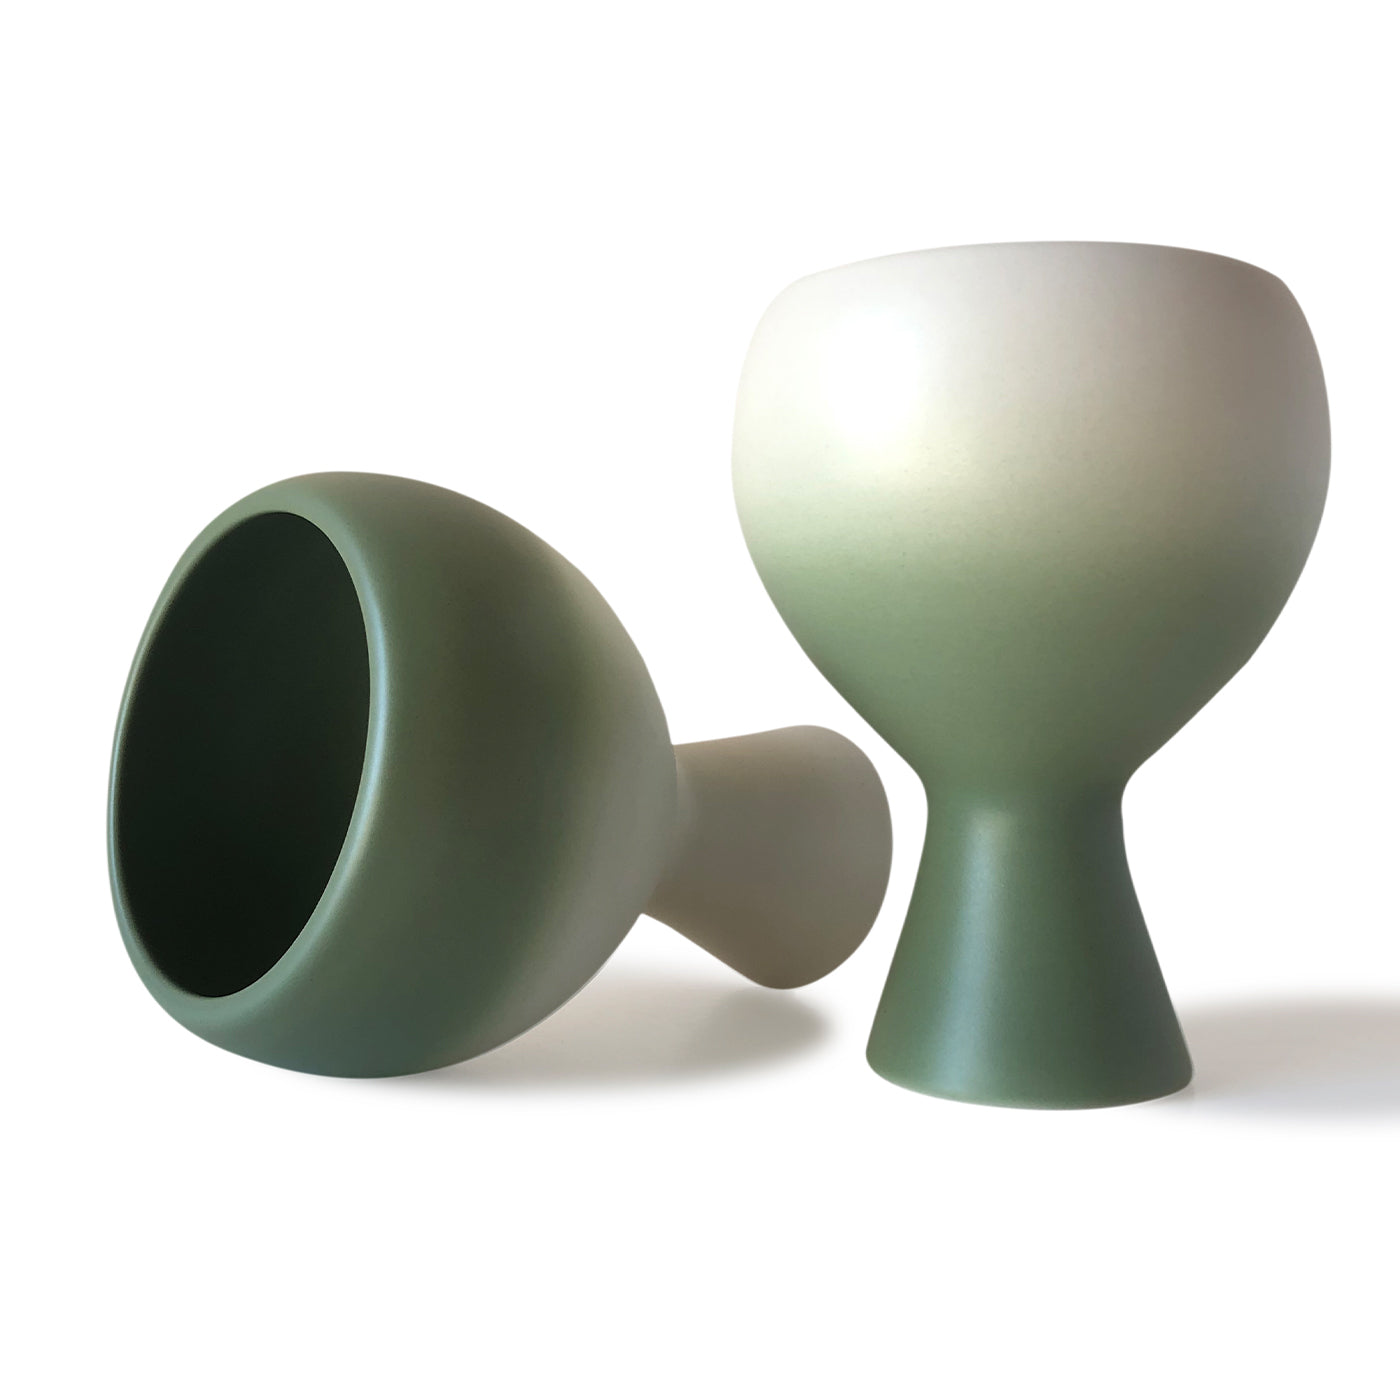 Inseparabili Green Set of 2 Cups - Alternative view 1